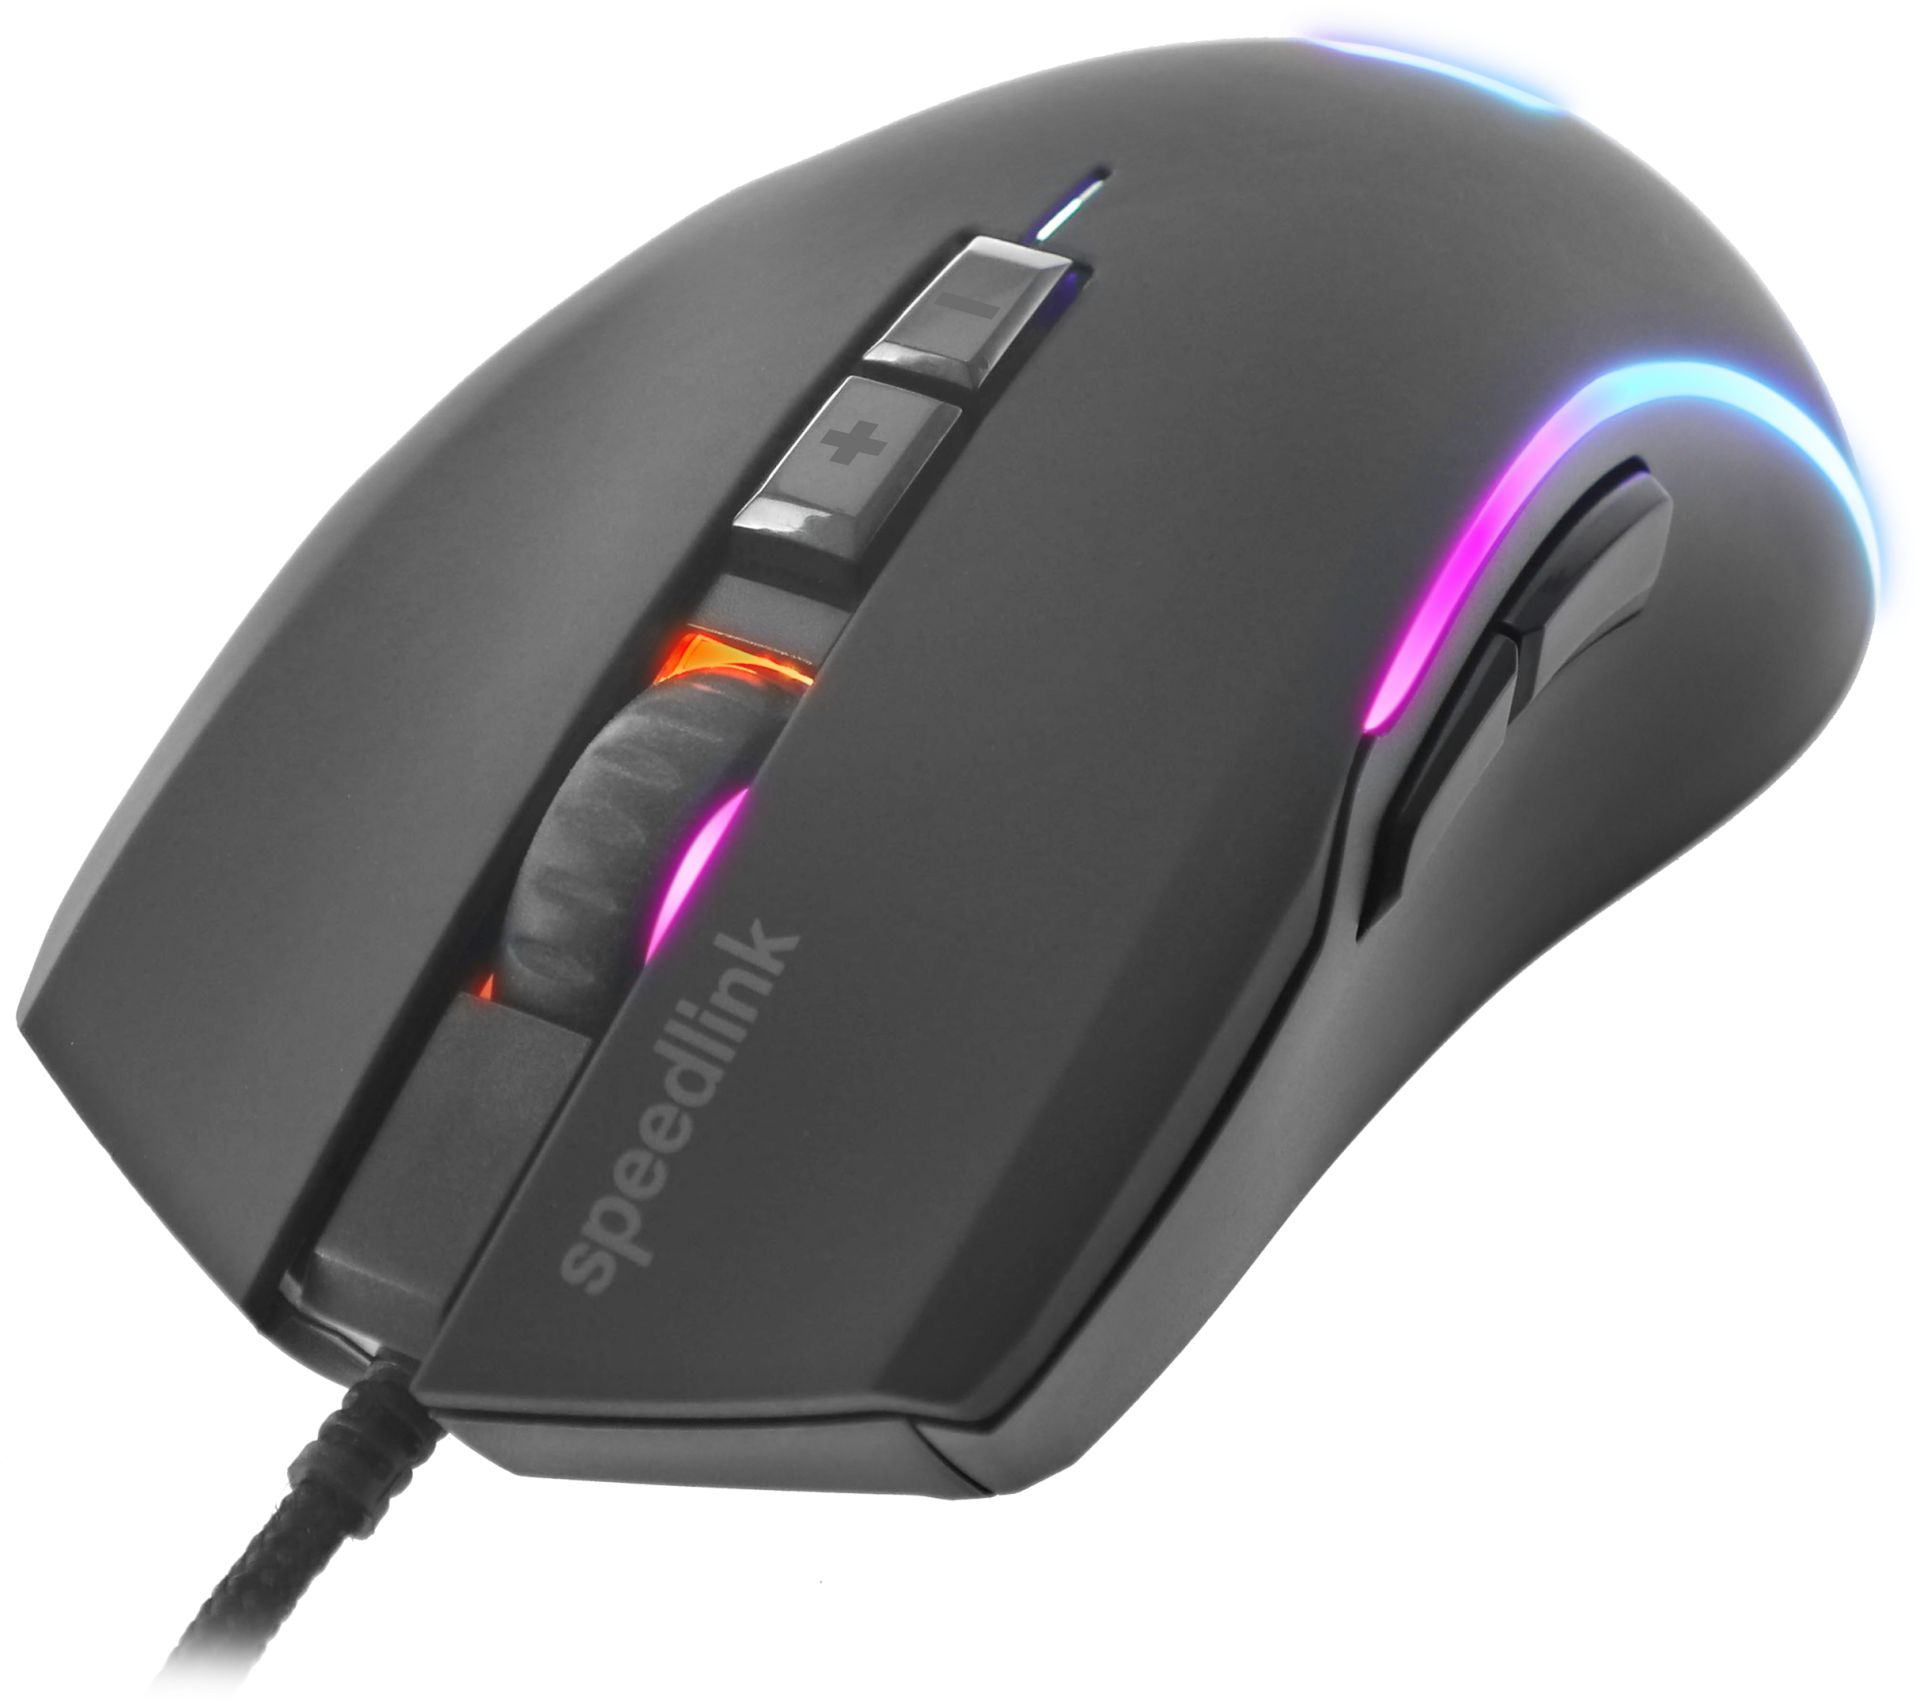 Speedlink - ZAVOS Gaming Mouse, rubber-black